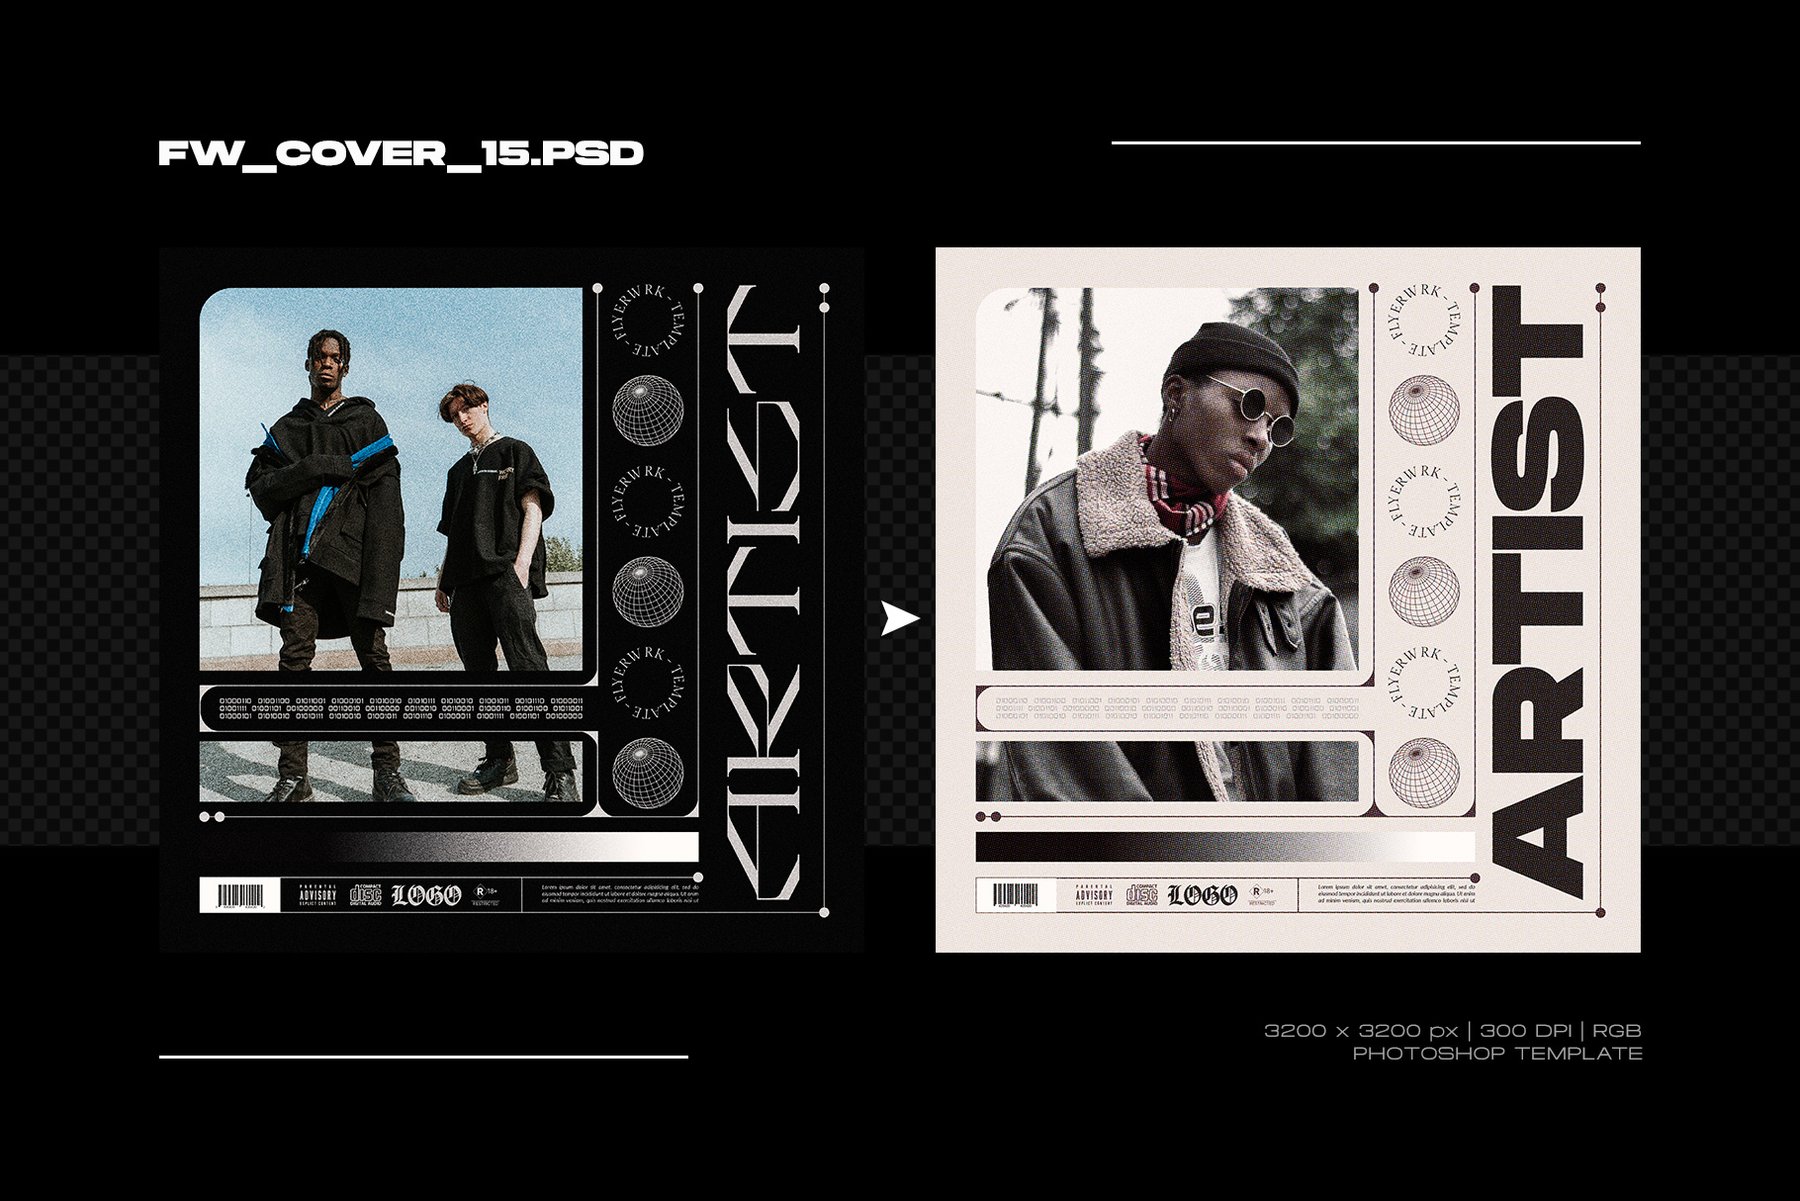 Flyerwrk 嘻哈说唱高级创意大胆艺术魅力封面设计Photoshop模板 COVER DESIGNS VOL.03